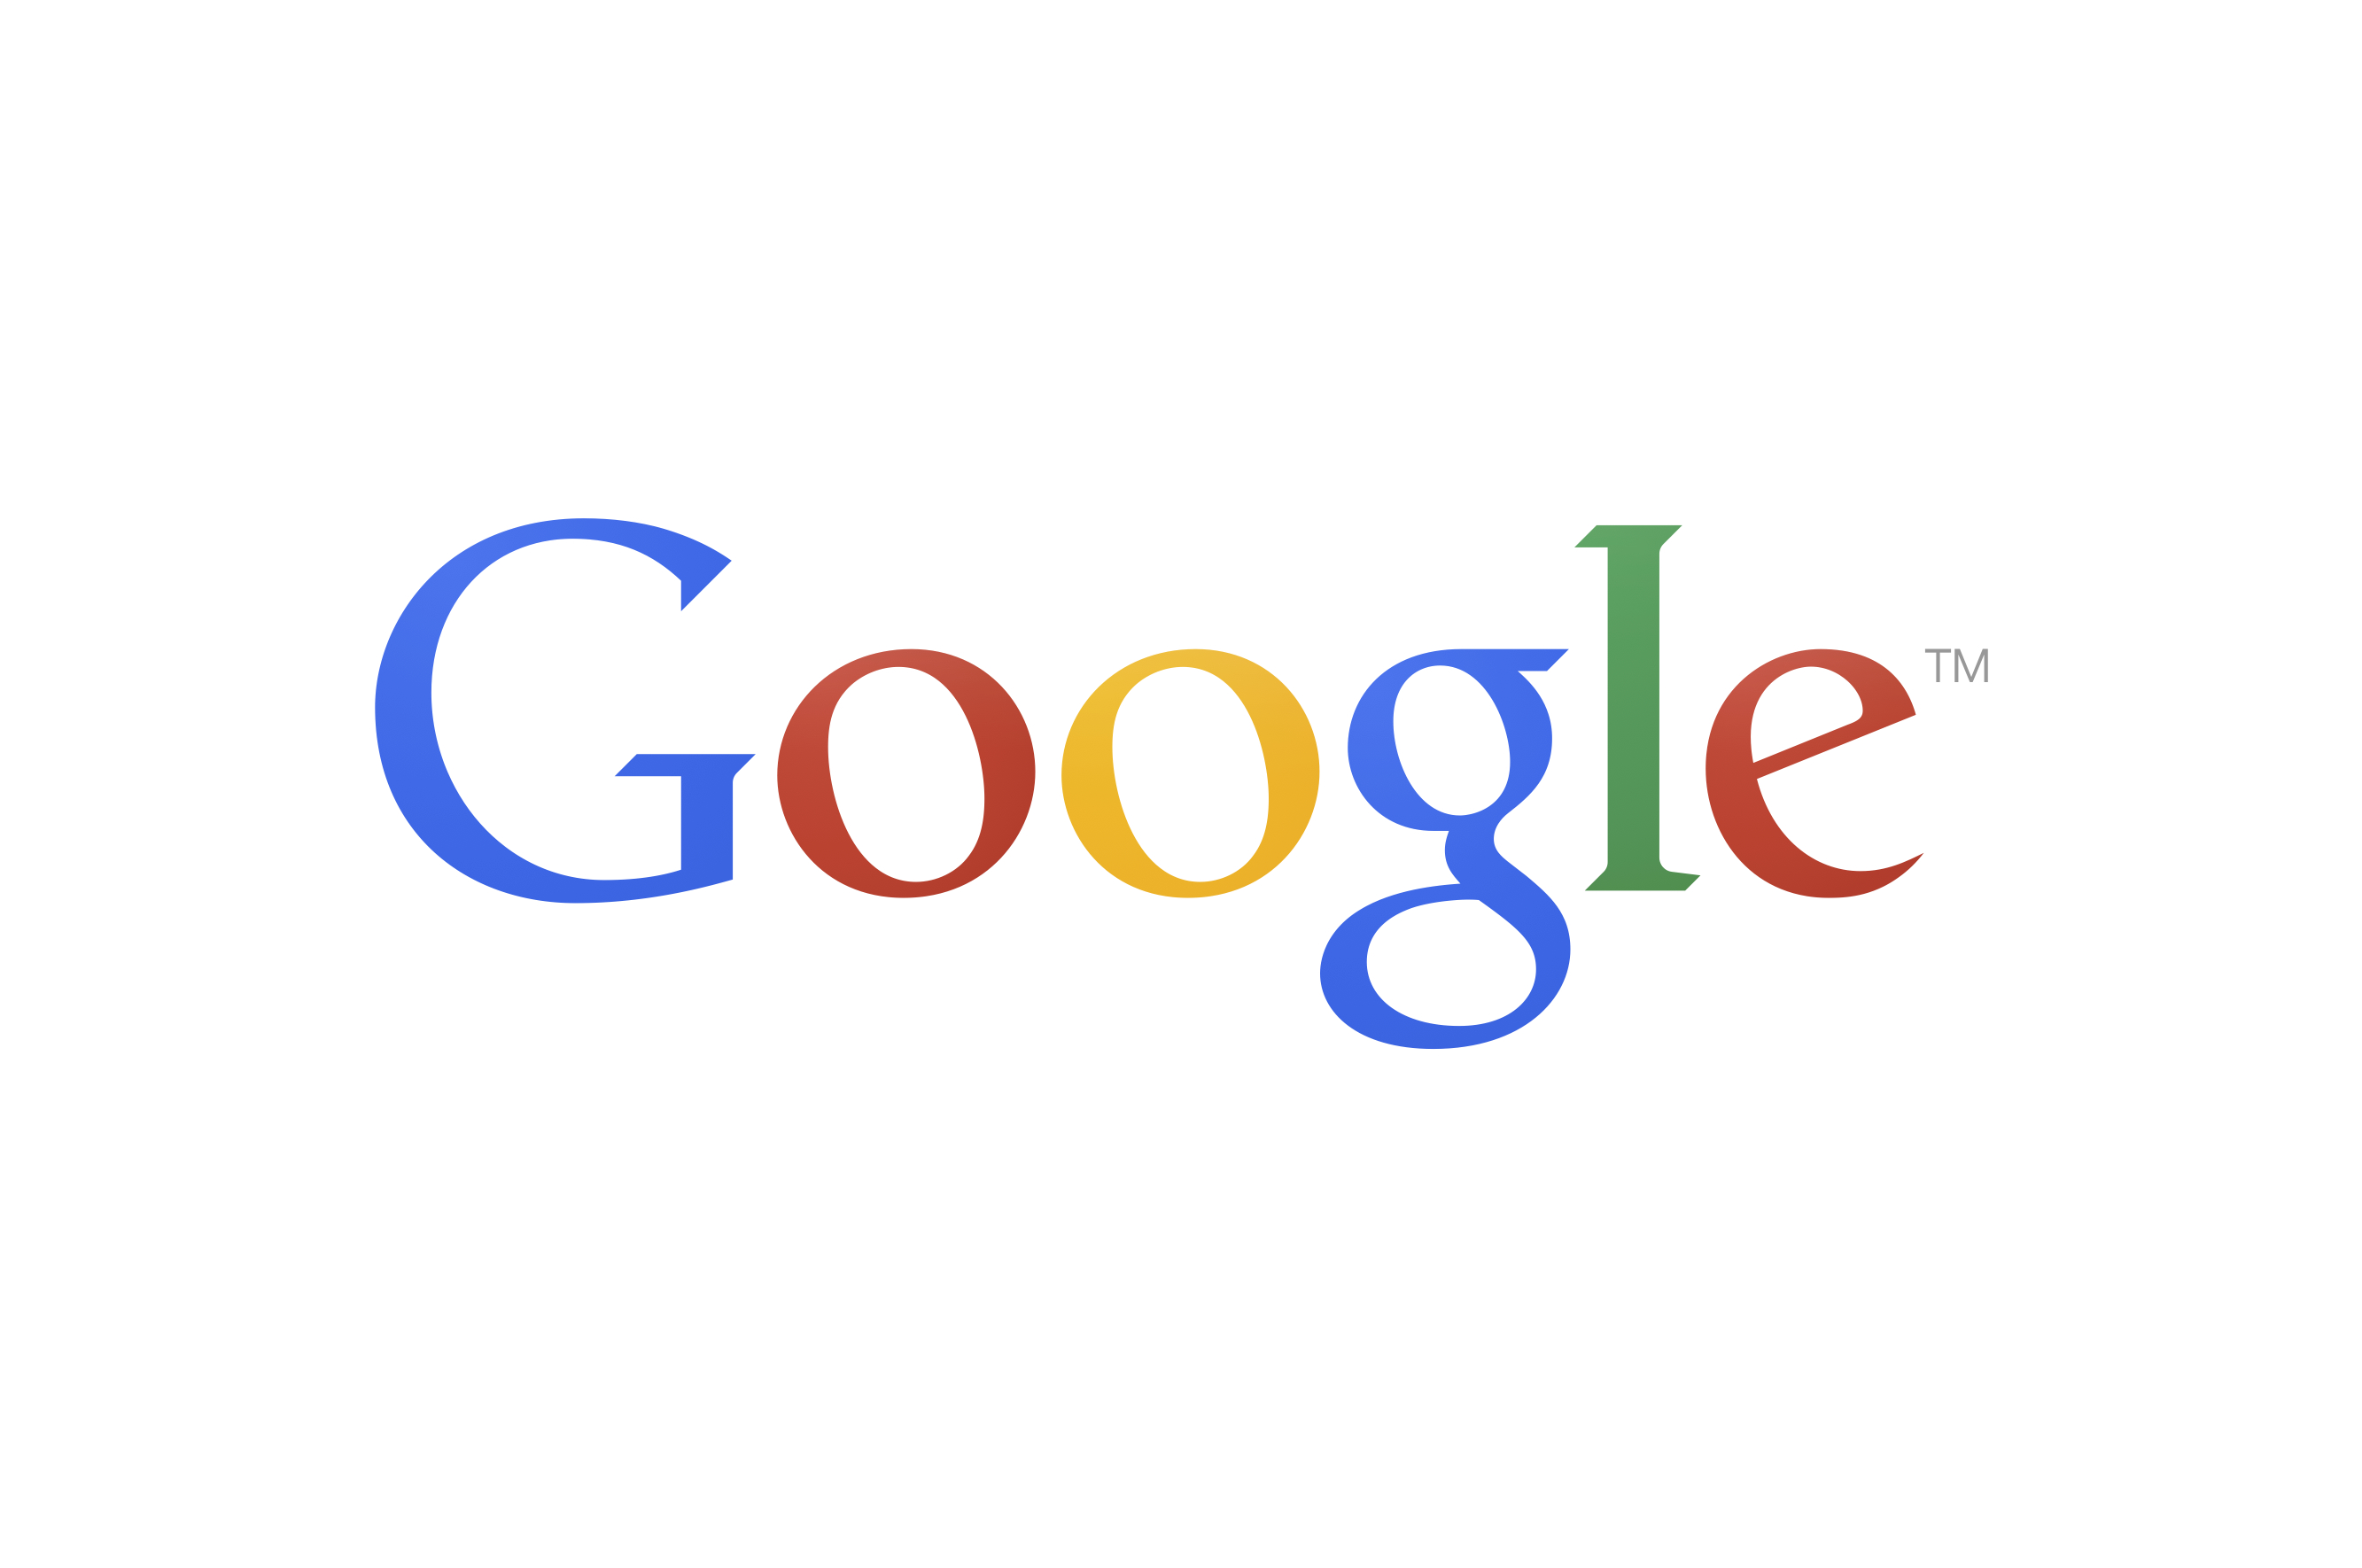 Goo gl google. Гугл. Значок Google. Гугл лого без фона.